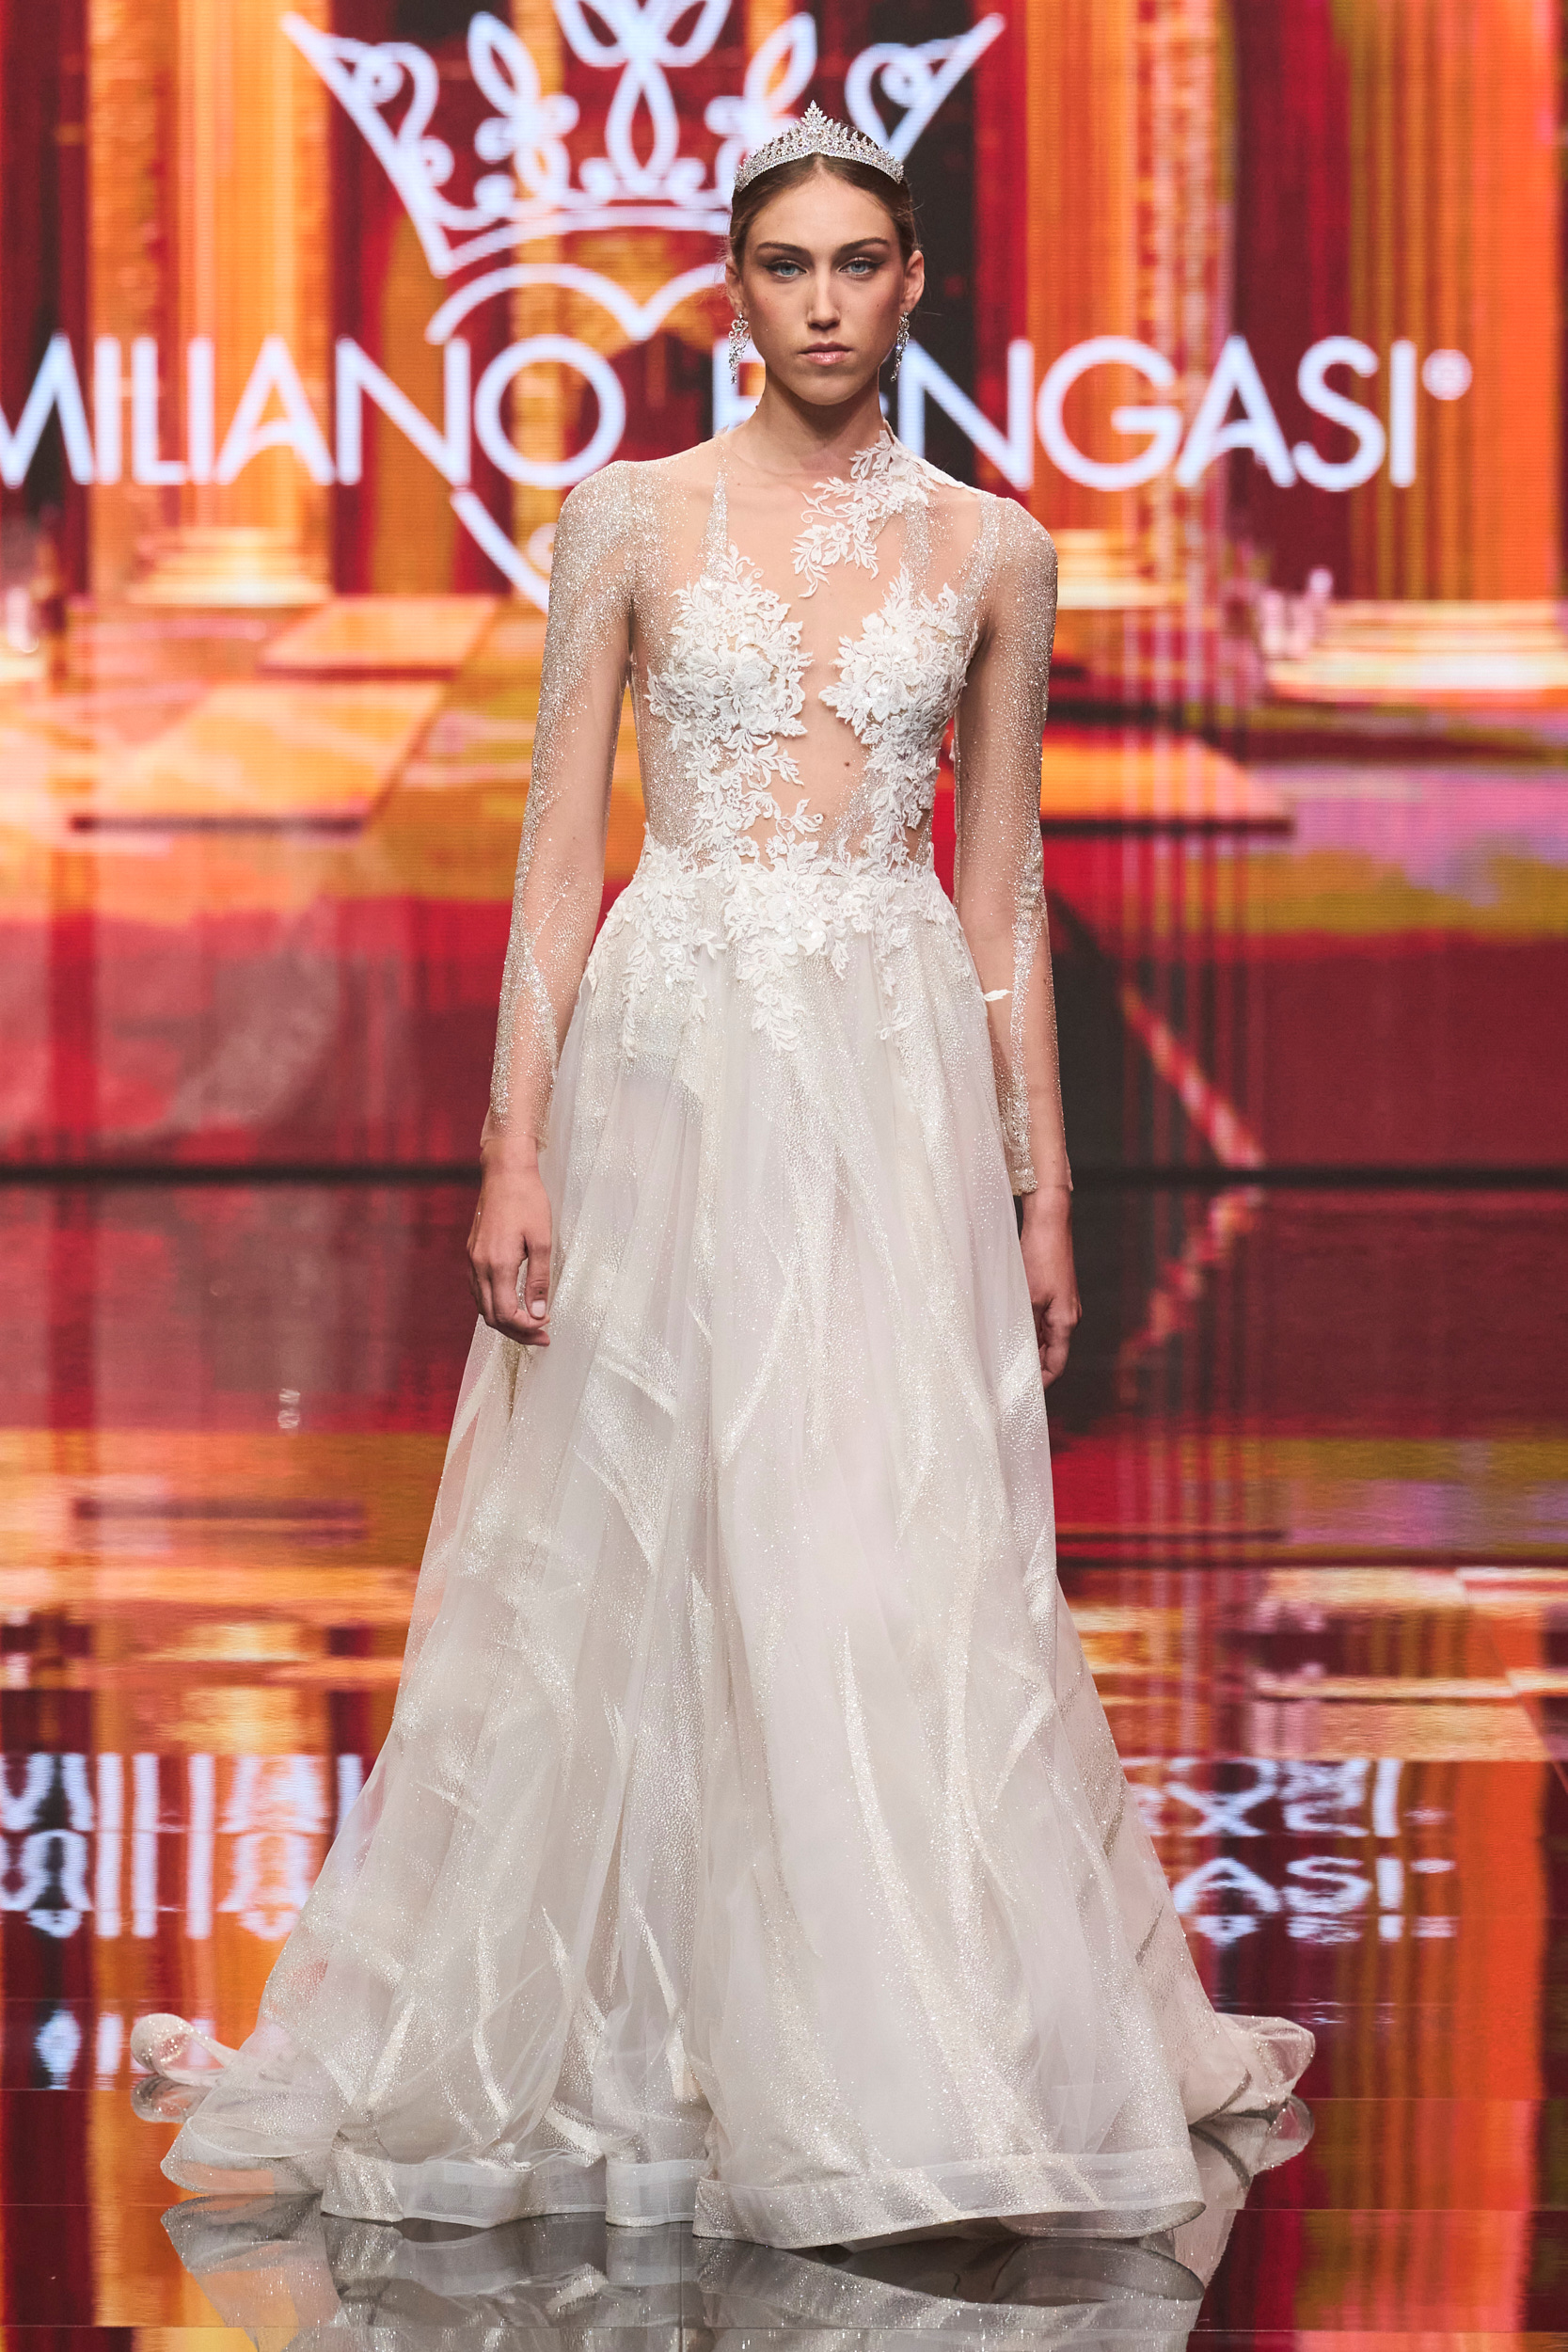 Emiliano Bengasi Bridal 2024 Fashion Show 